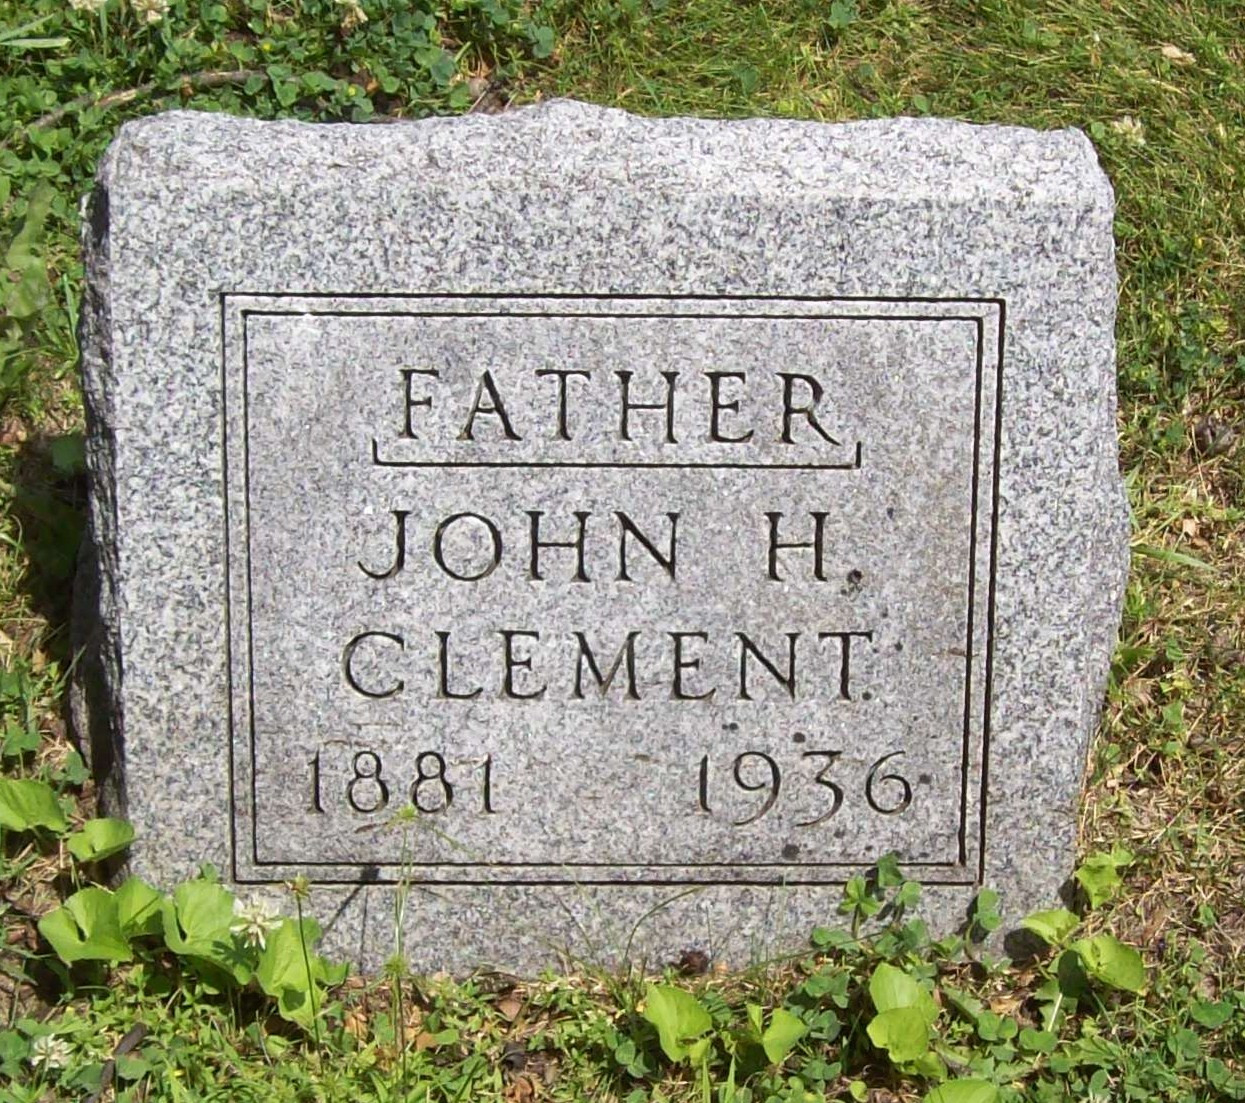 John Harvey Clement 